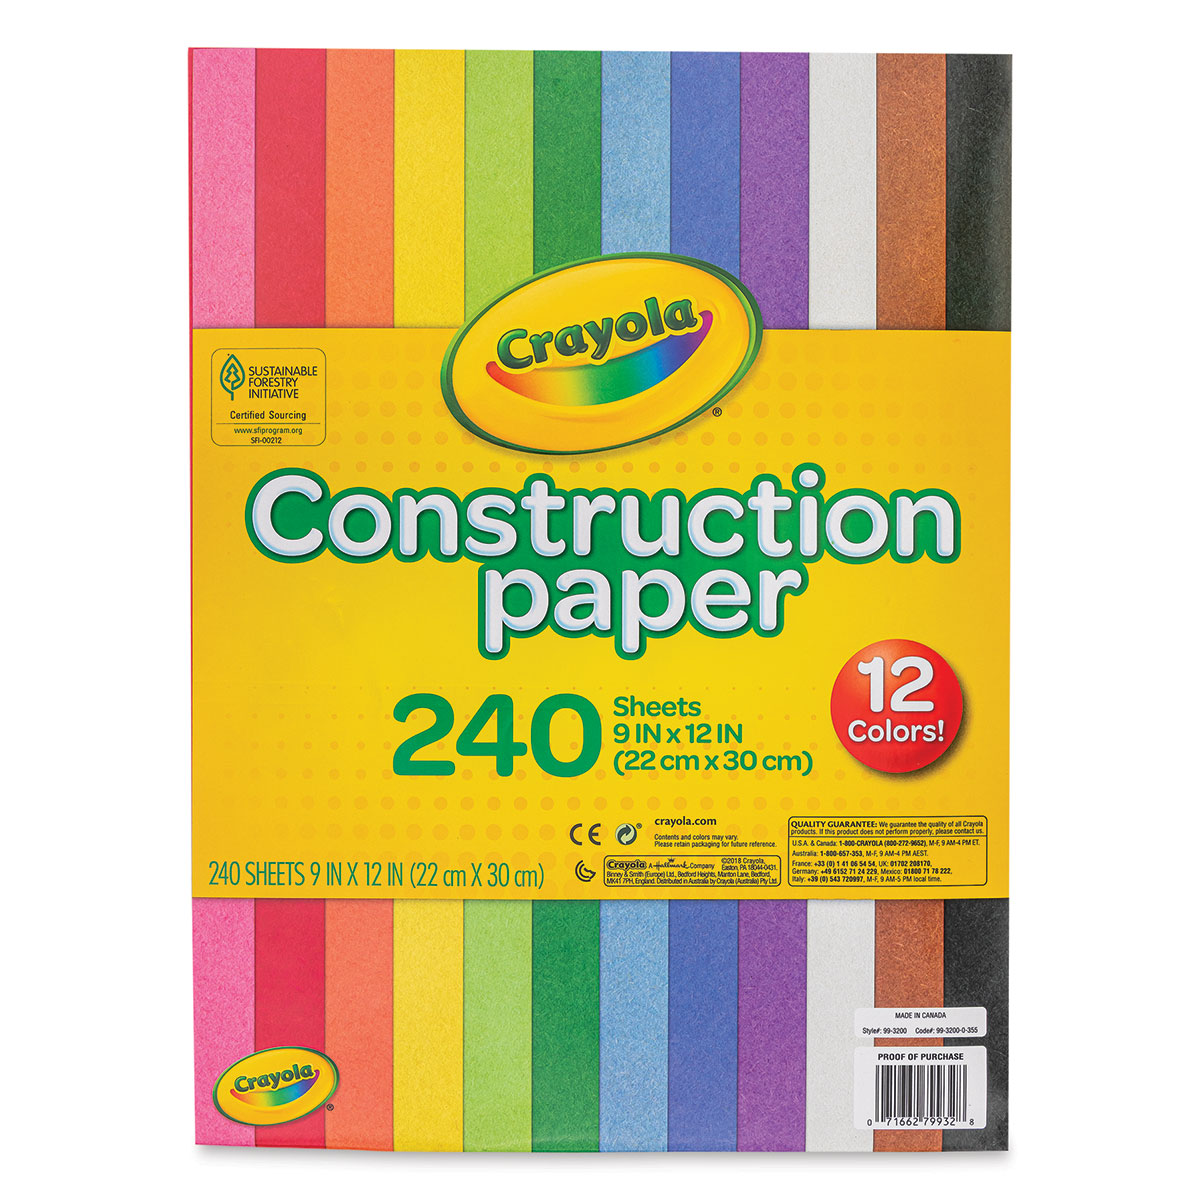 Crayola Construction Paper - 96 Sheets